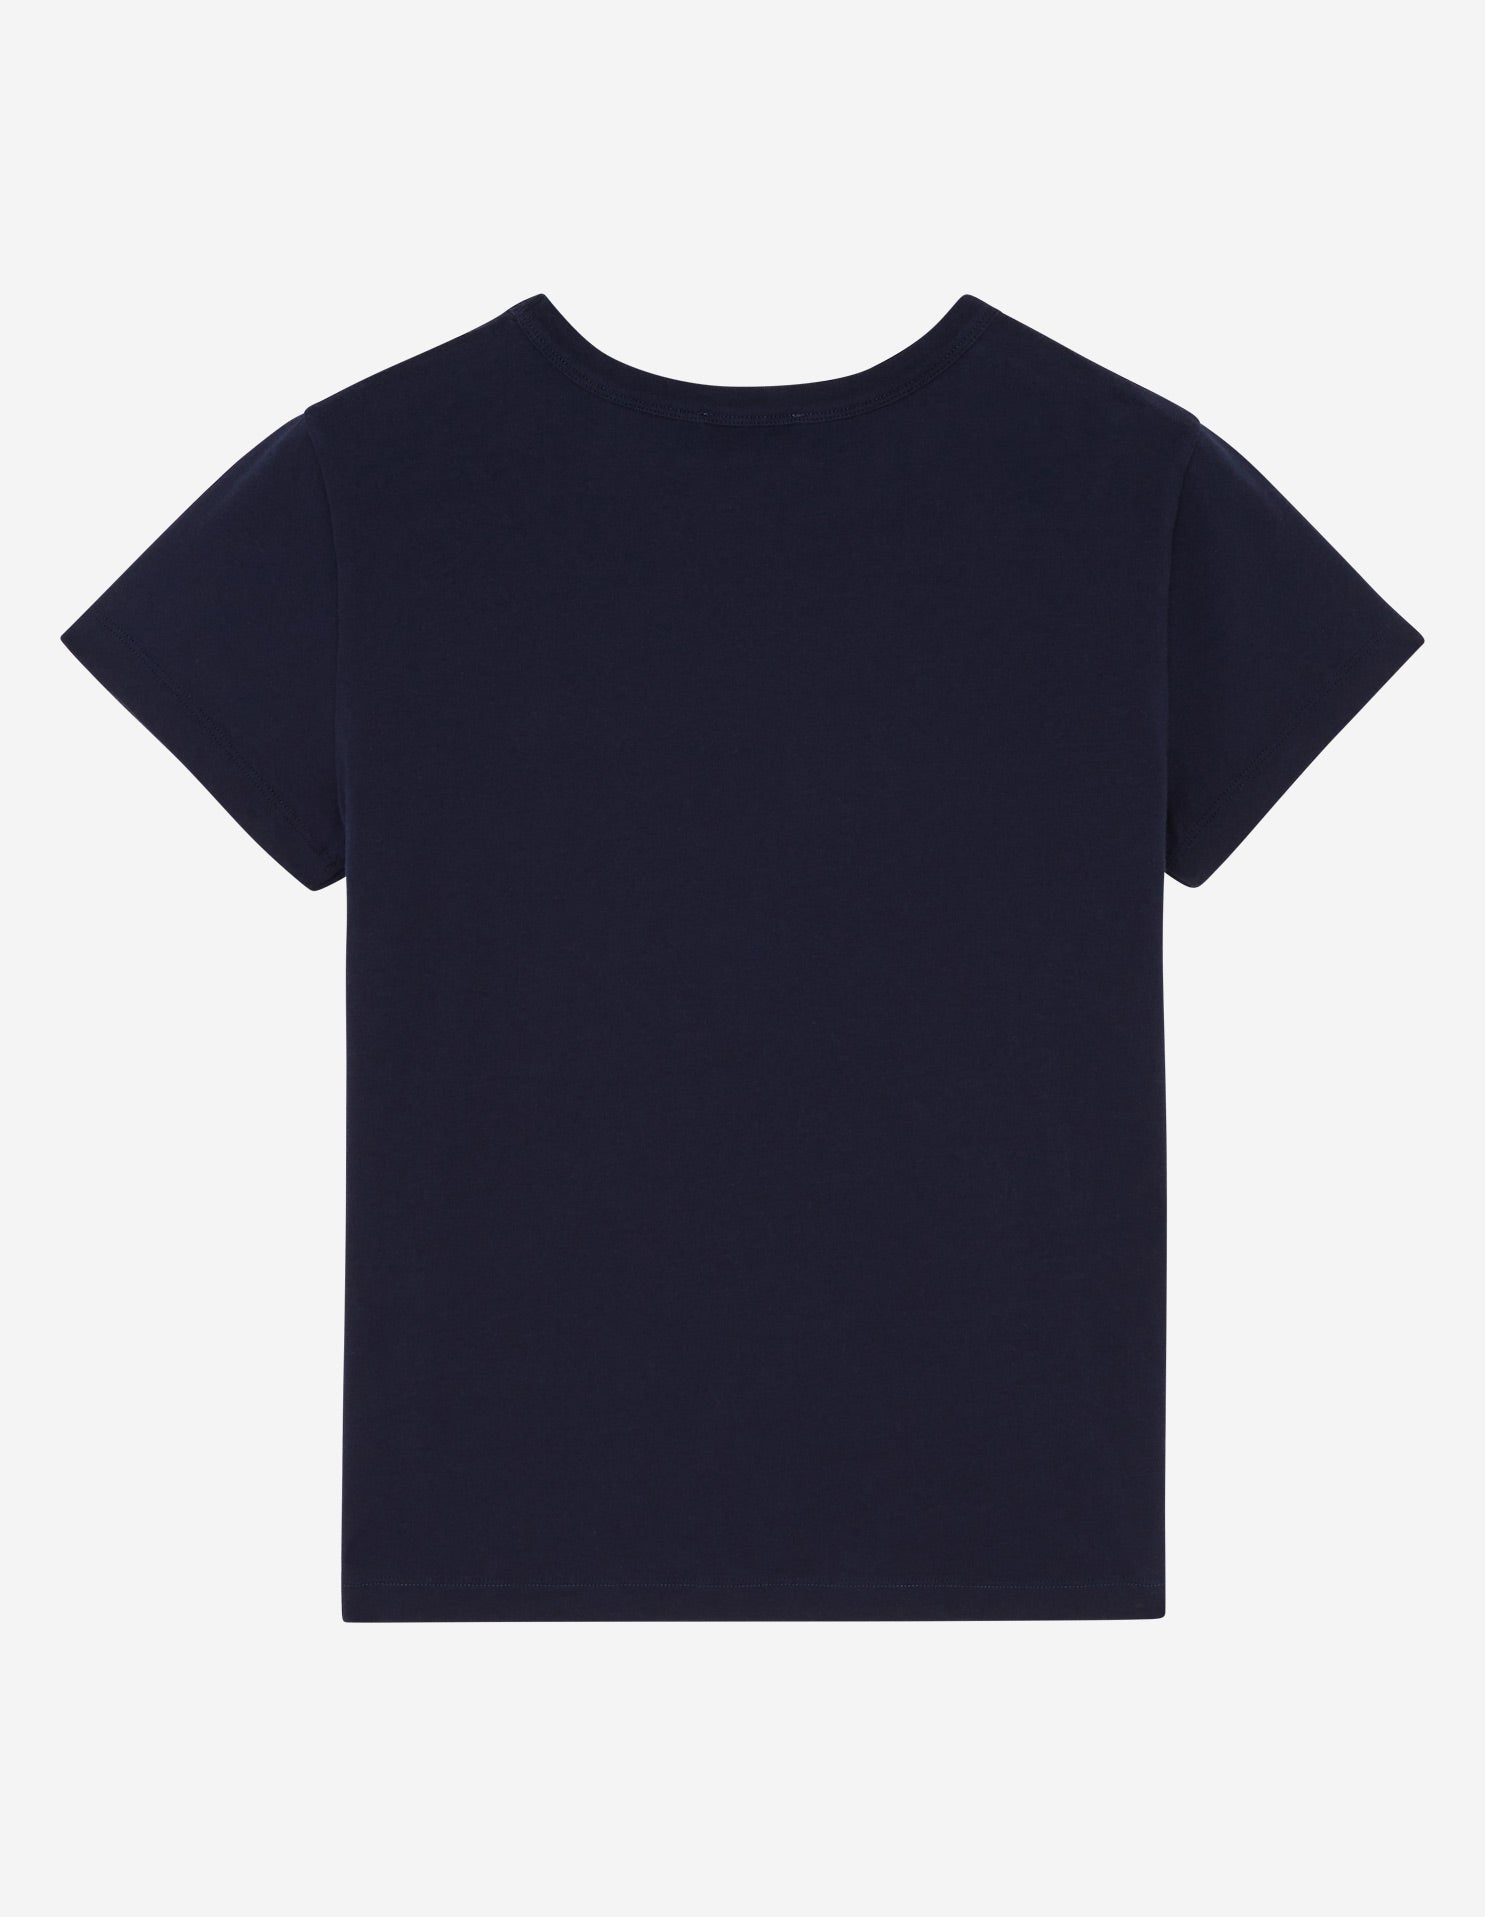 Tricolour fox pocket t-shirt, navy